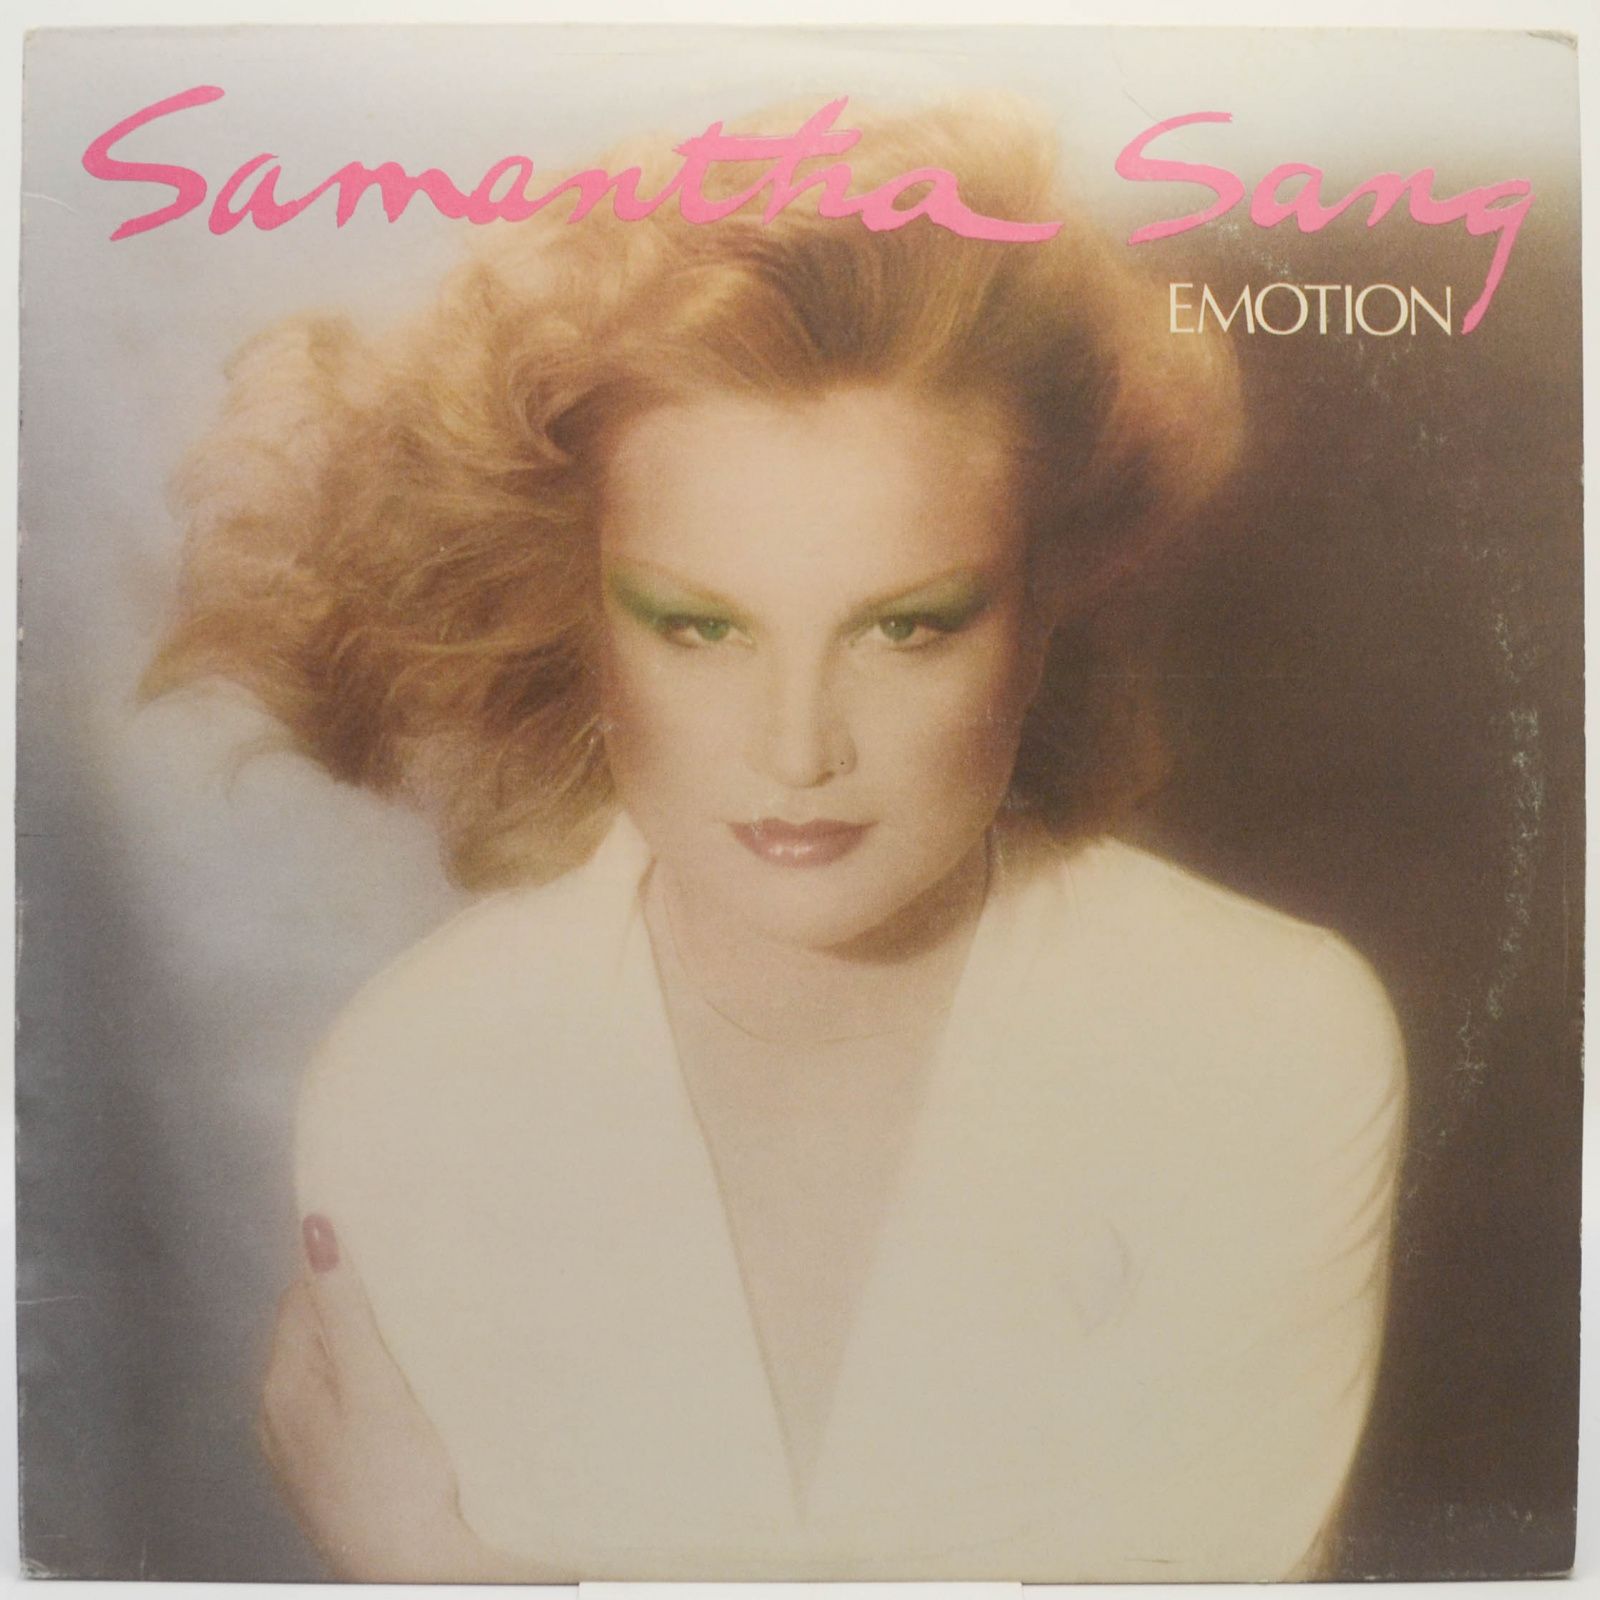 Samantha Sang — Emotion, 1978